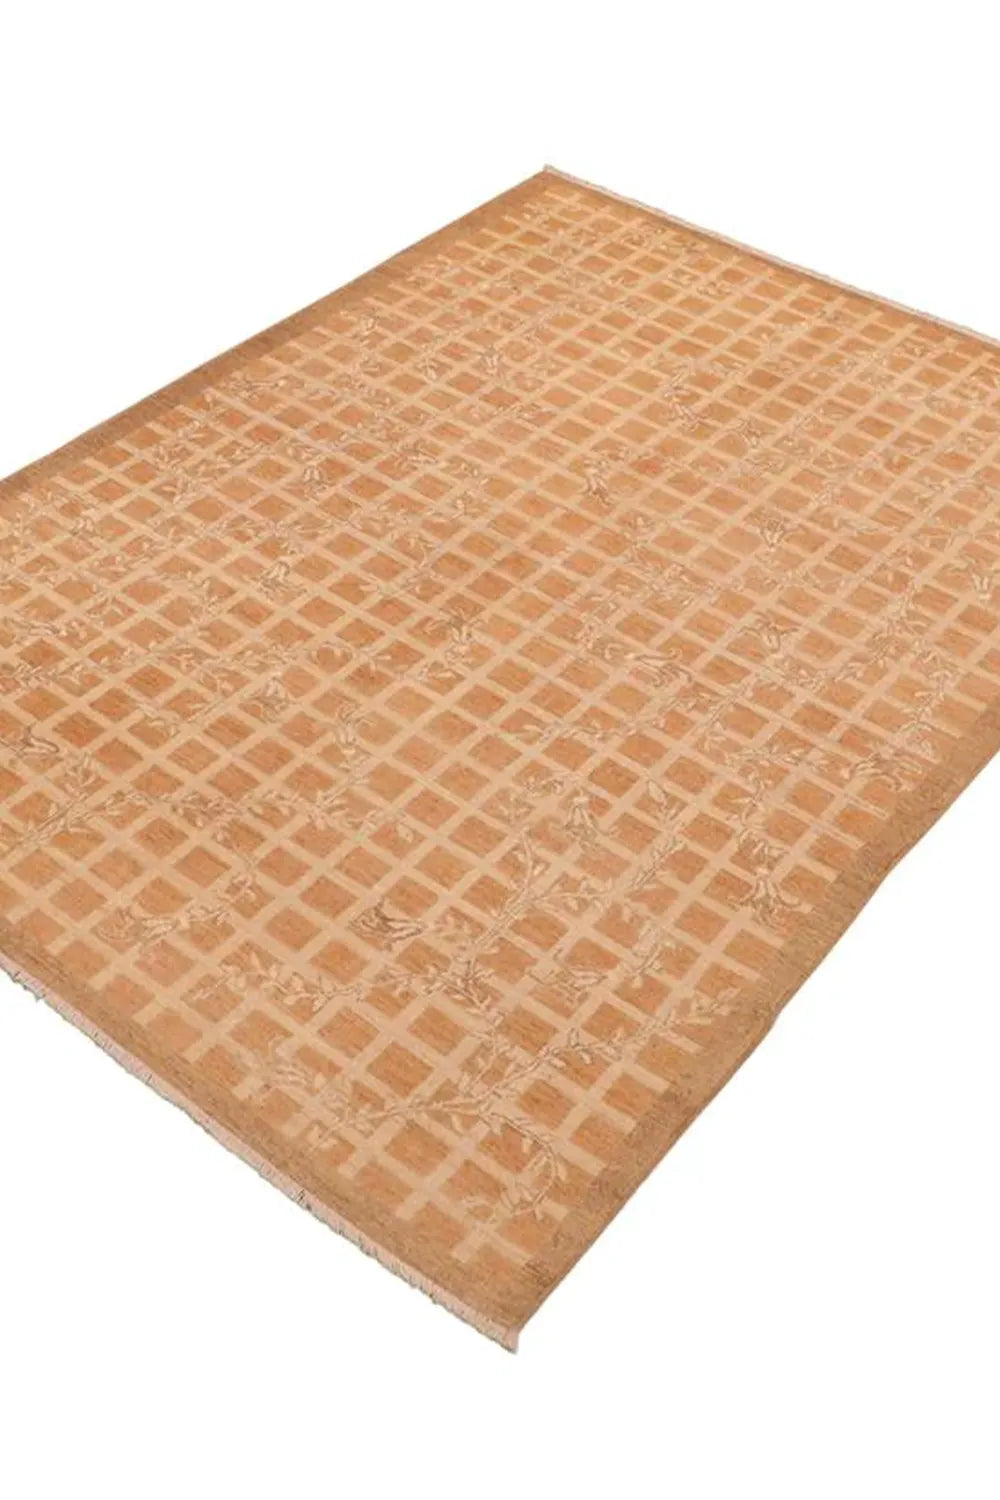 minimalist grid pattern gold and cream rug, a blend of modern design and artisanal craftsmanship